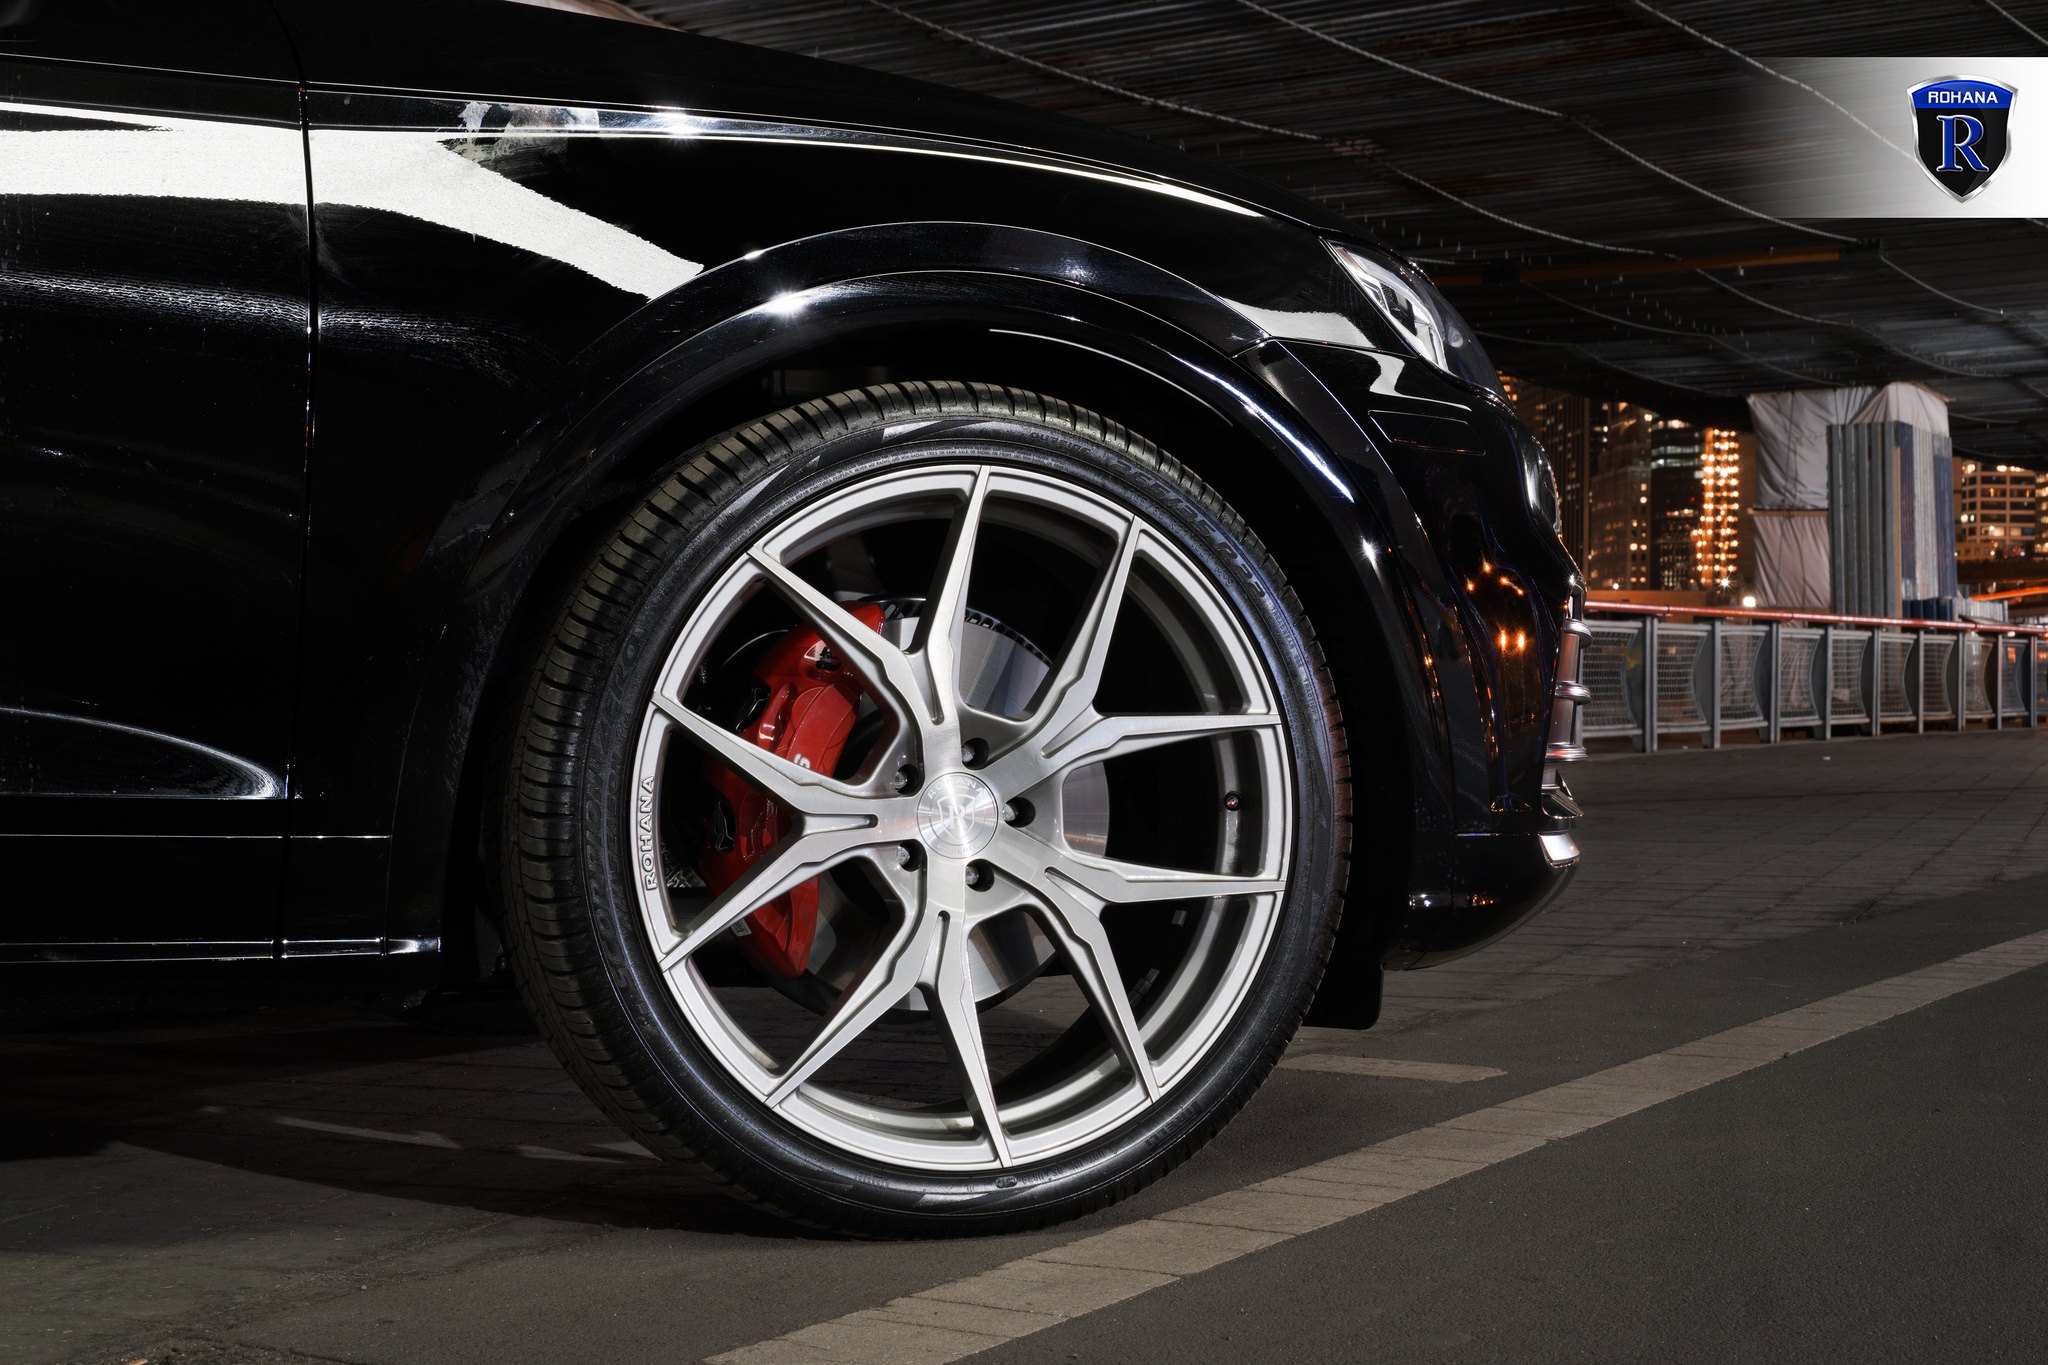 Black Audi Q5 with Chrome Rohana Wheels - Photo by Rohana